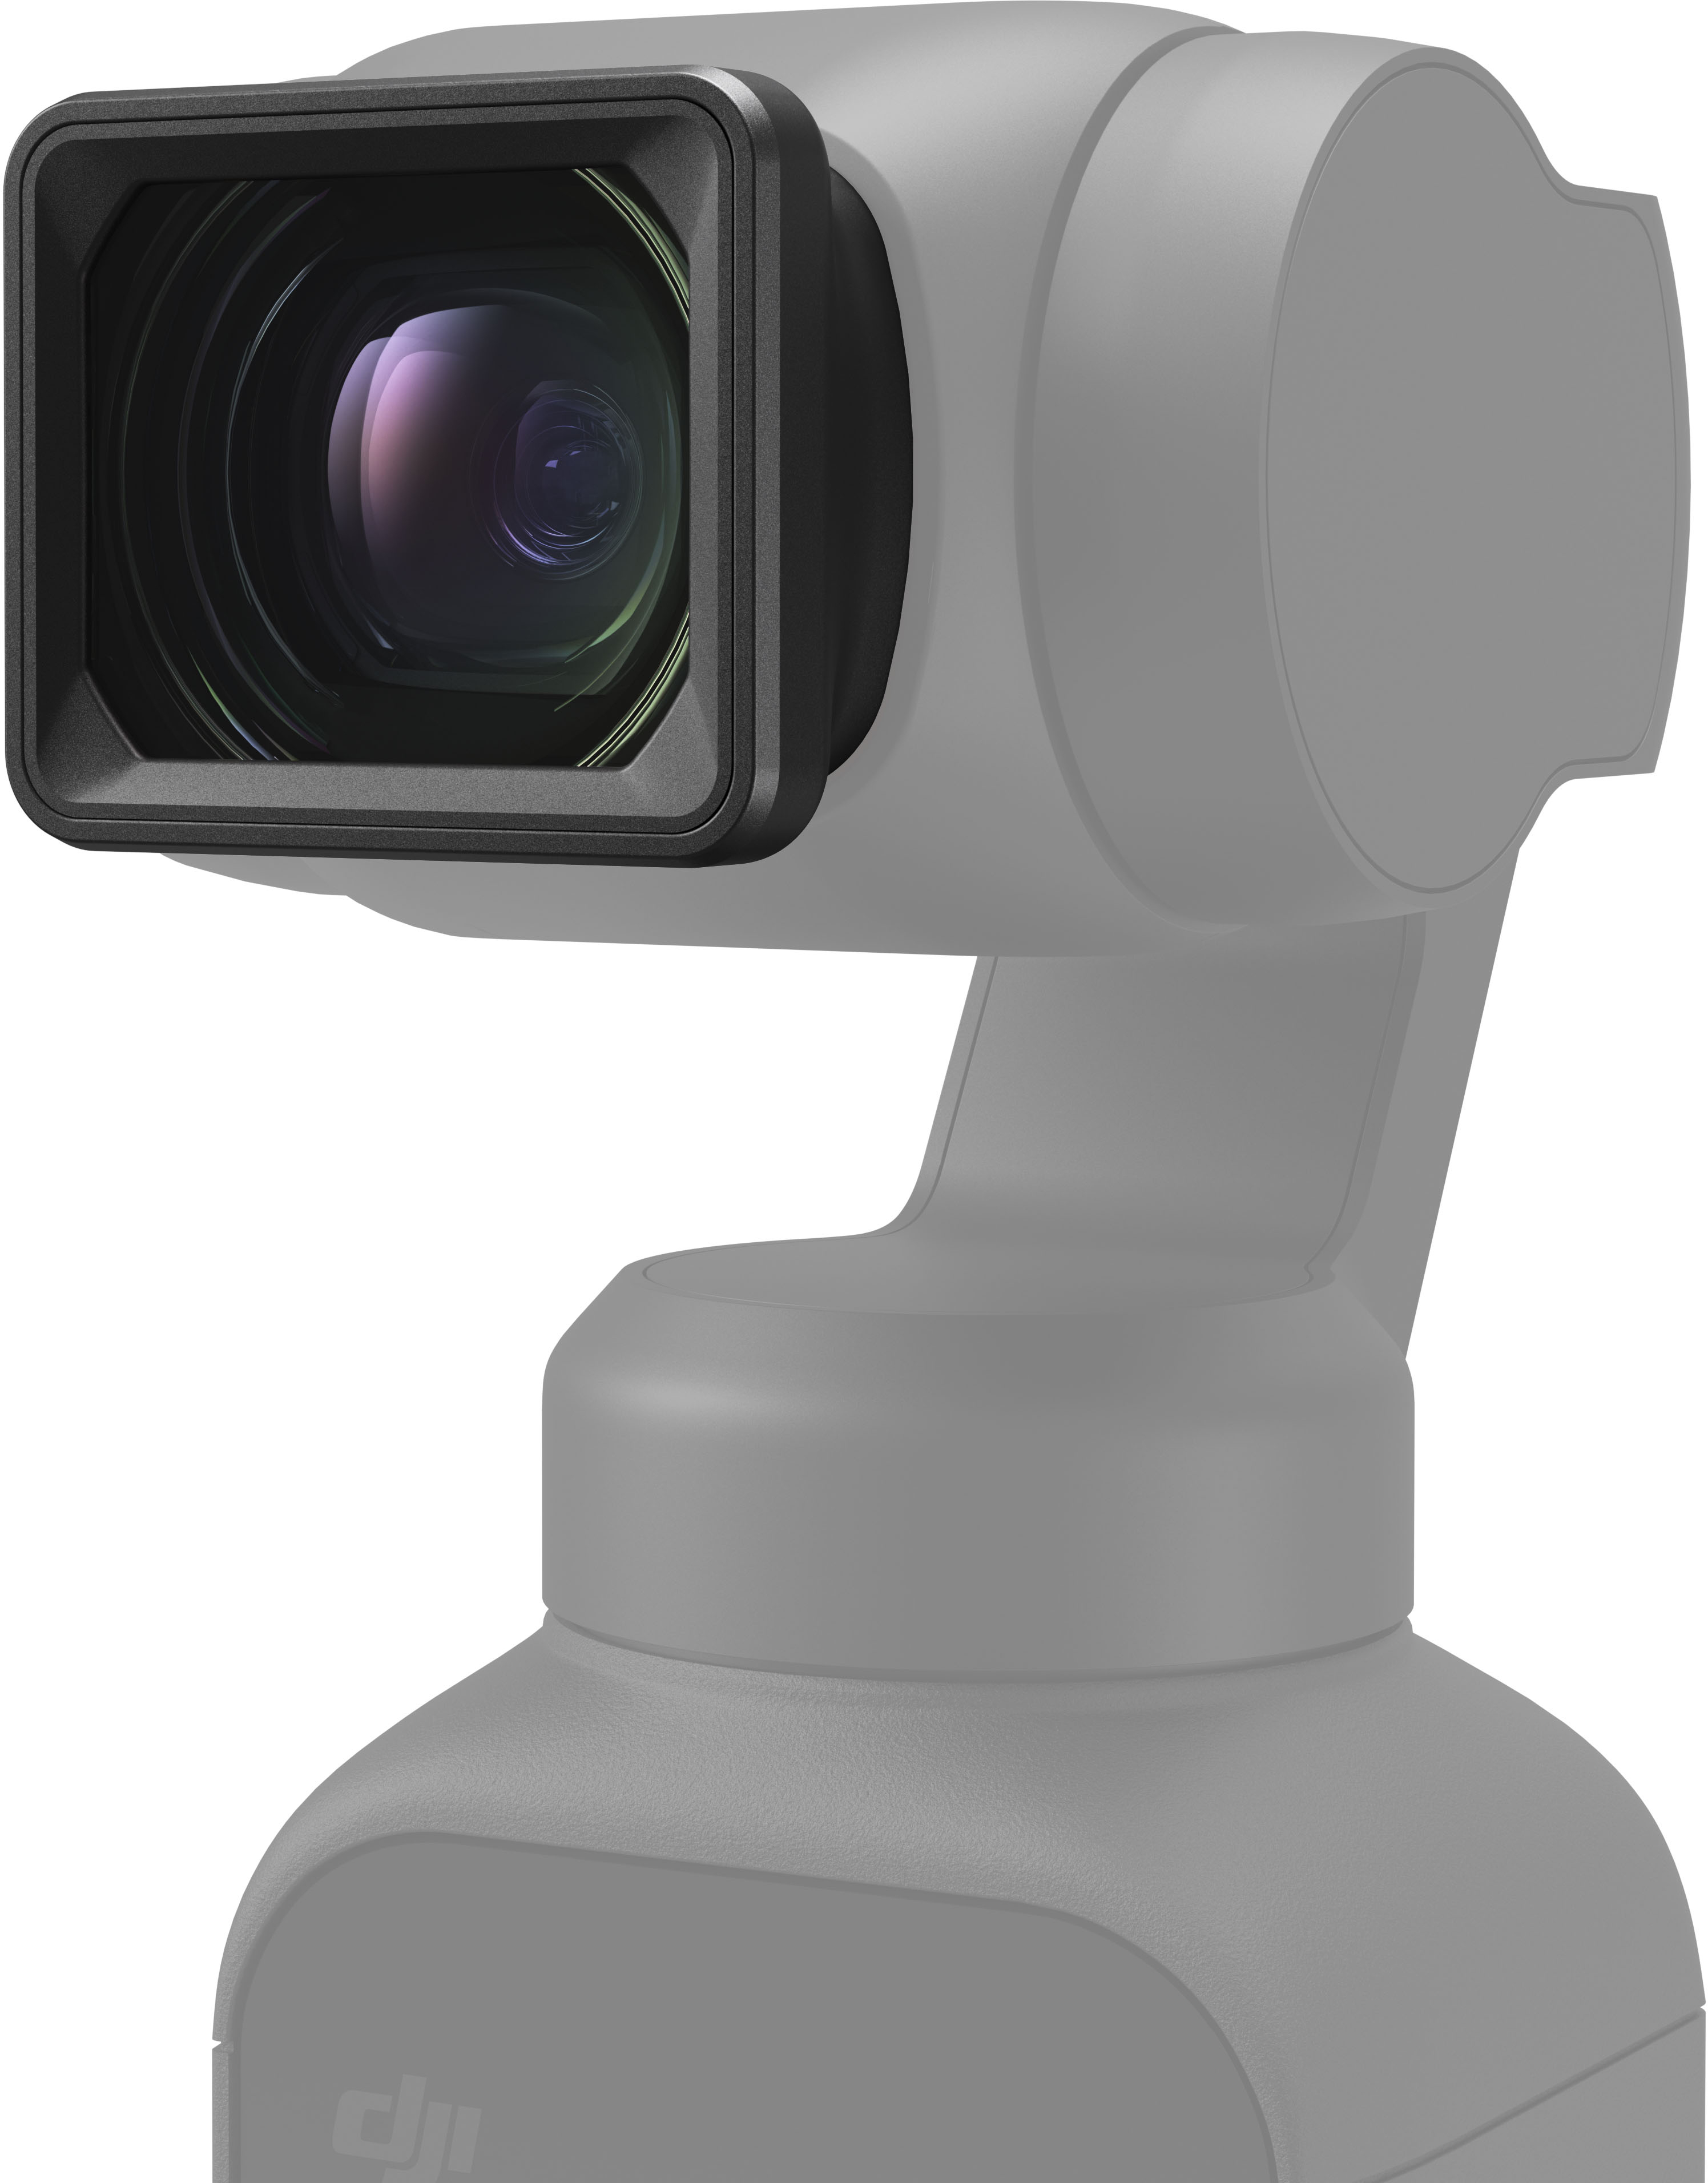 DJI Pocket 2 Wide-Angle Lens for Osmo Pocket and DJI Pocket 2